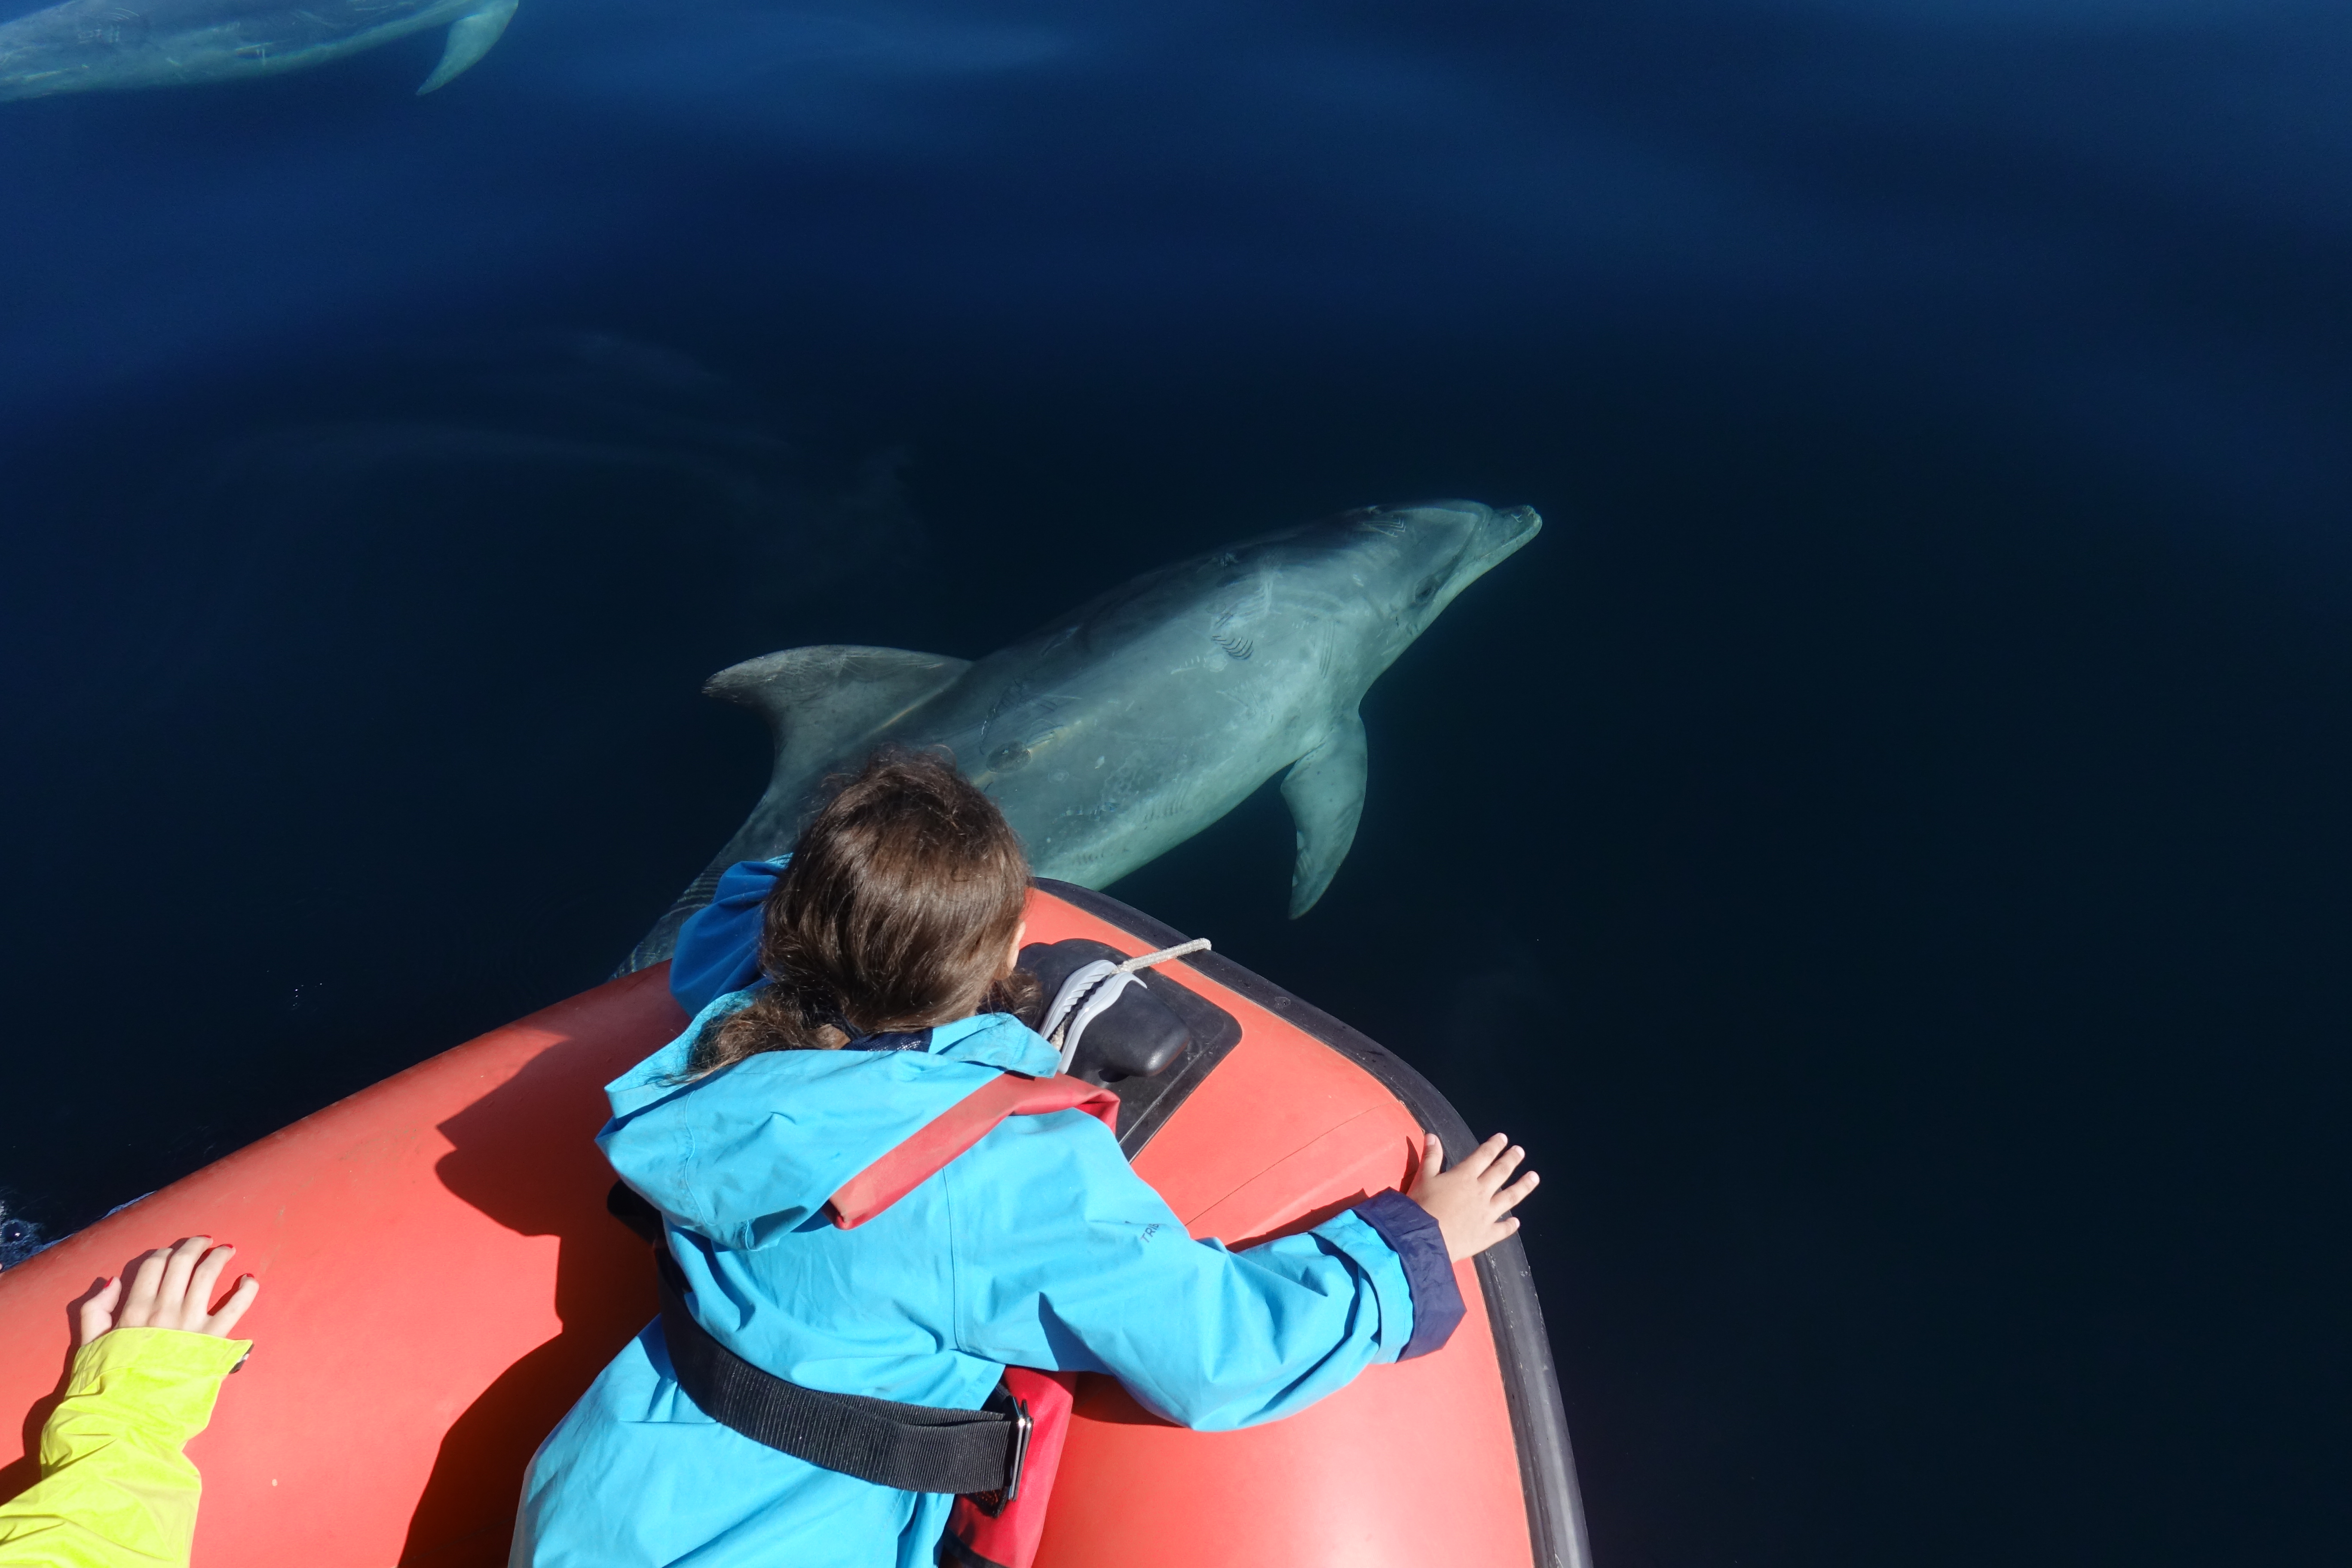 Dolphin, Whale & Bird watching in Lisbon